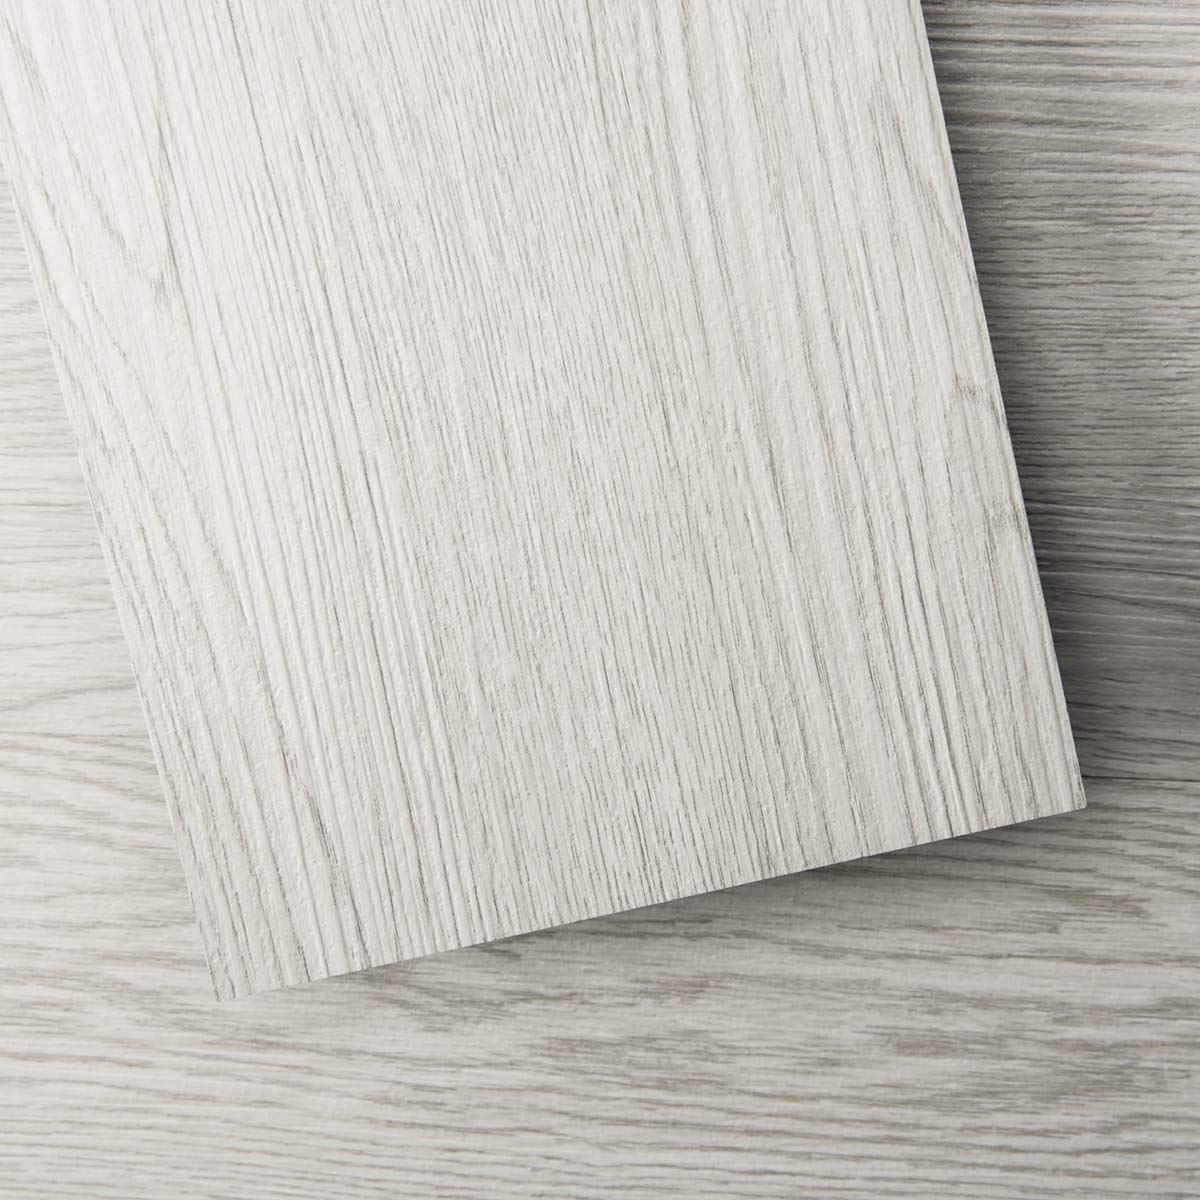 Art3d Peel and Stick Floor Tile Vinyl Wood Plank [...]